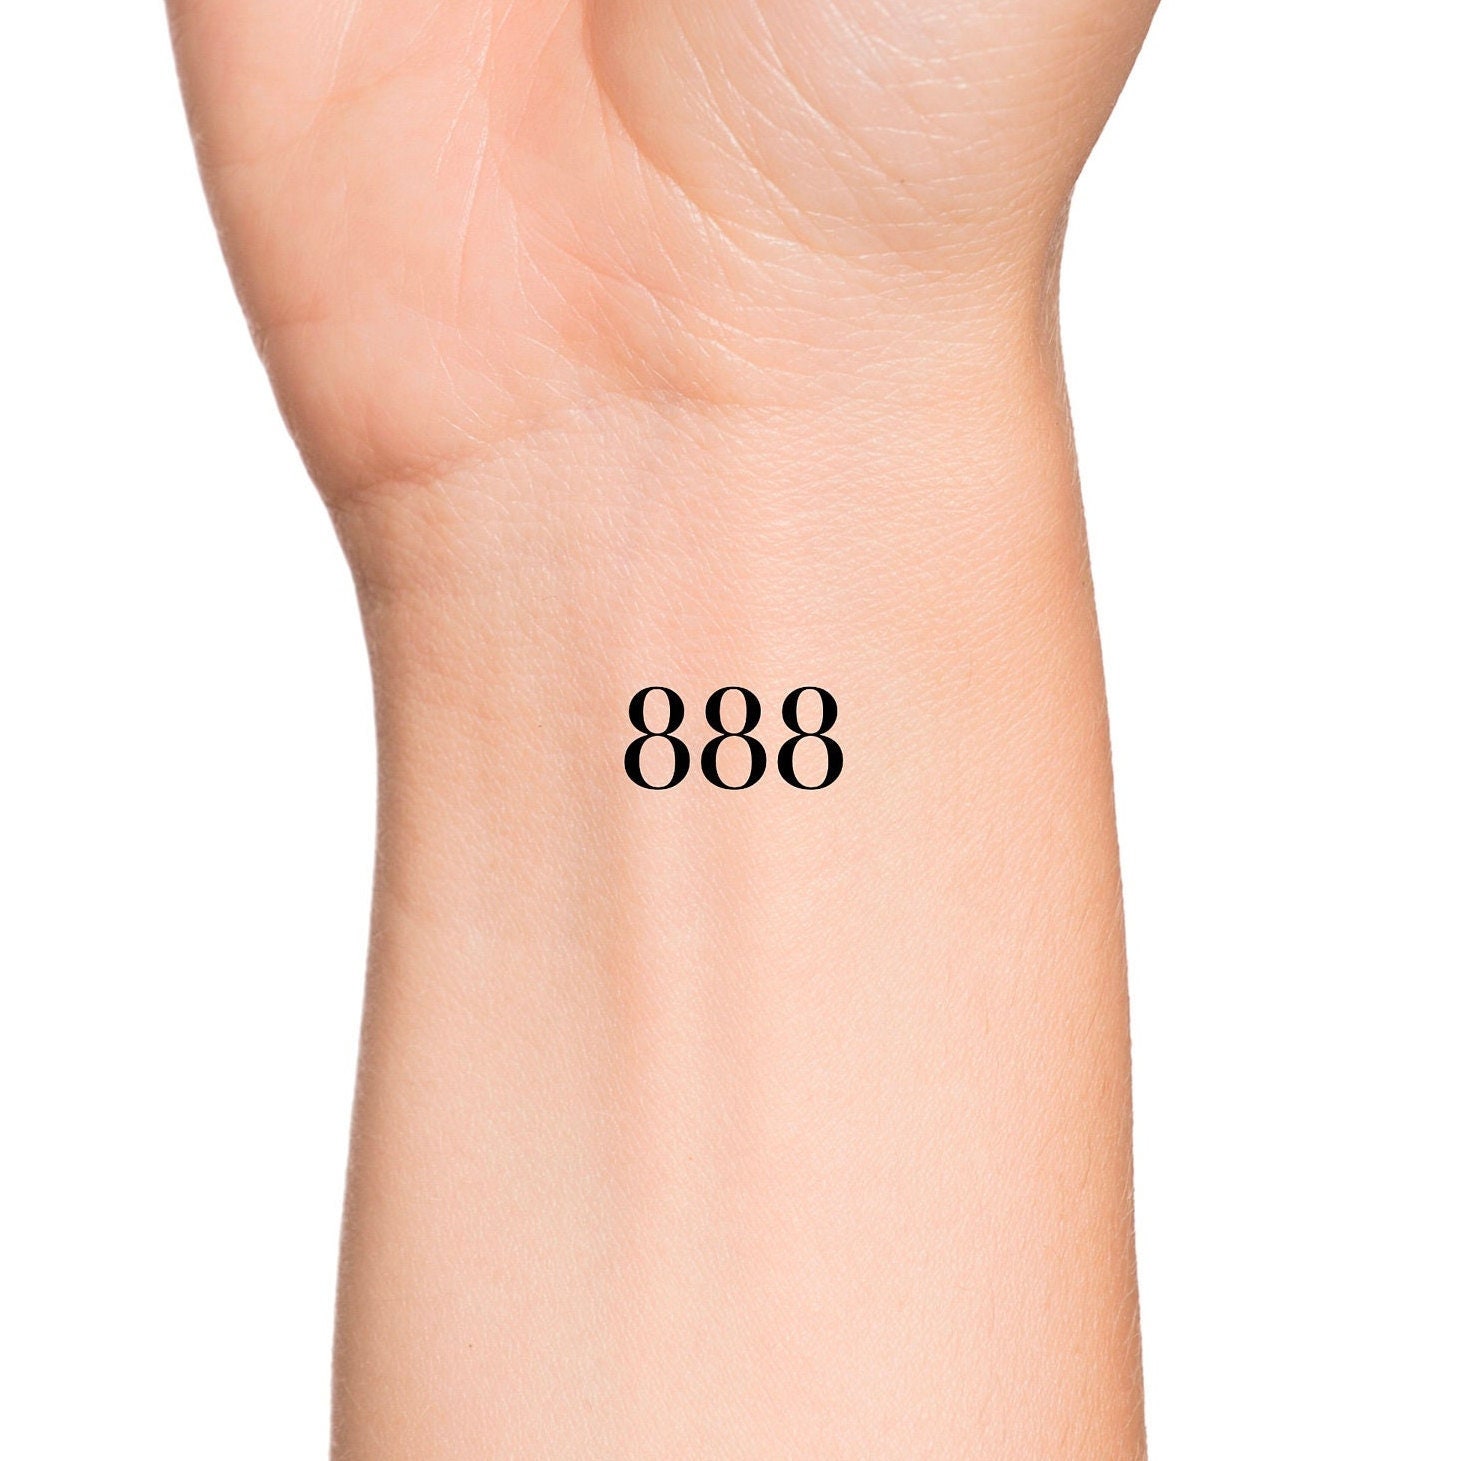 888 tattoo meaning and symbolism  MyTatouagecom